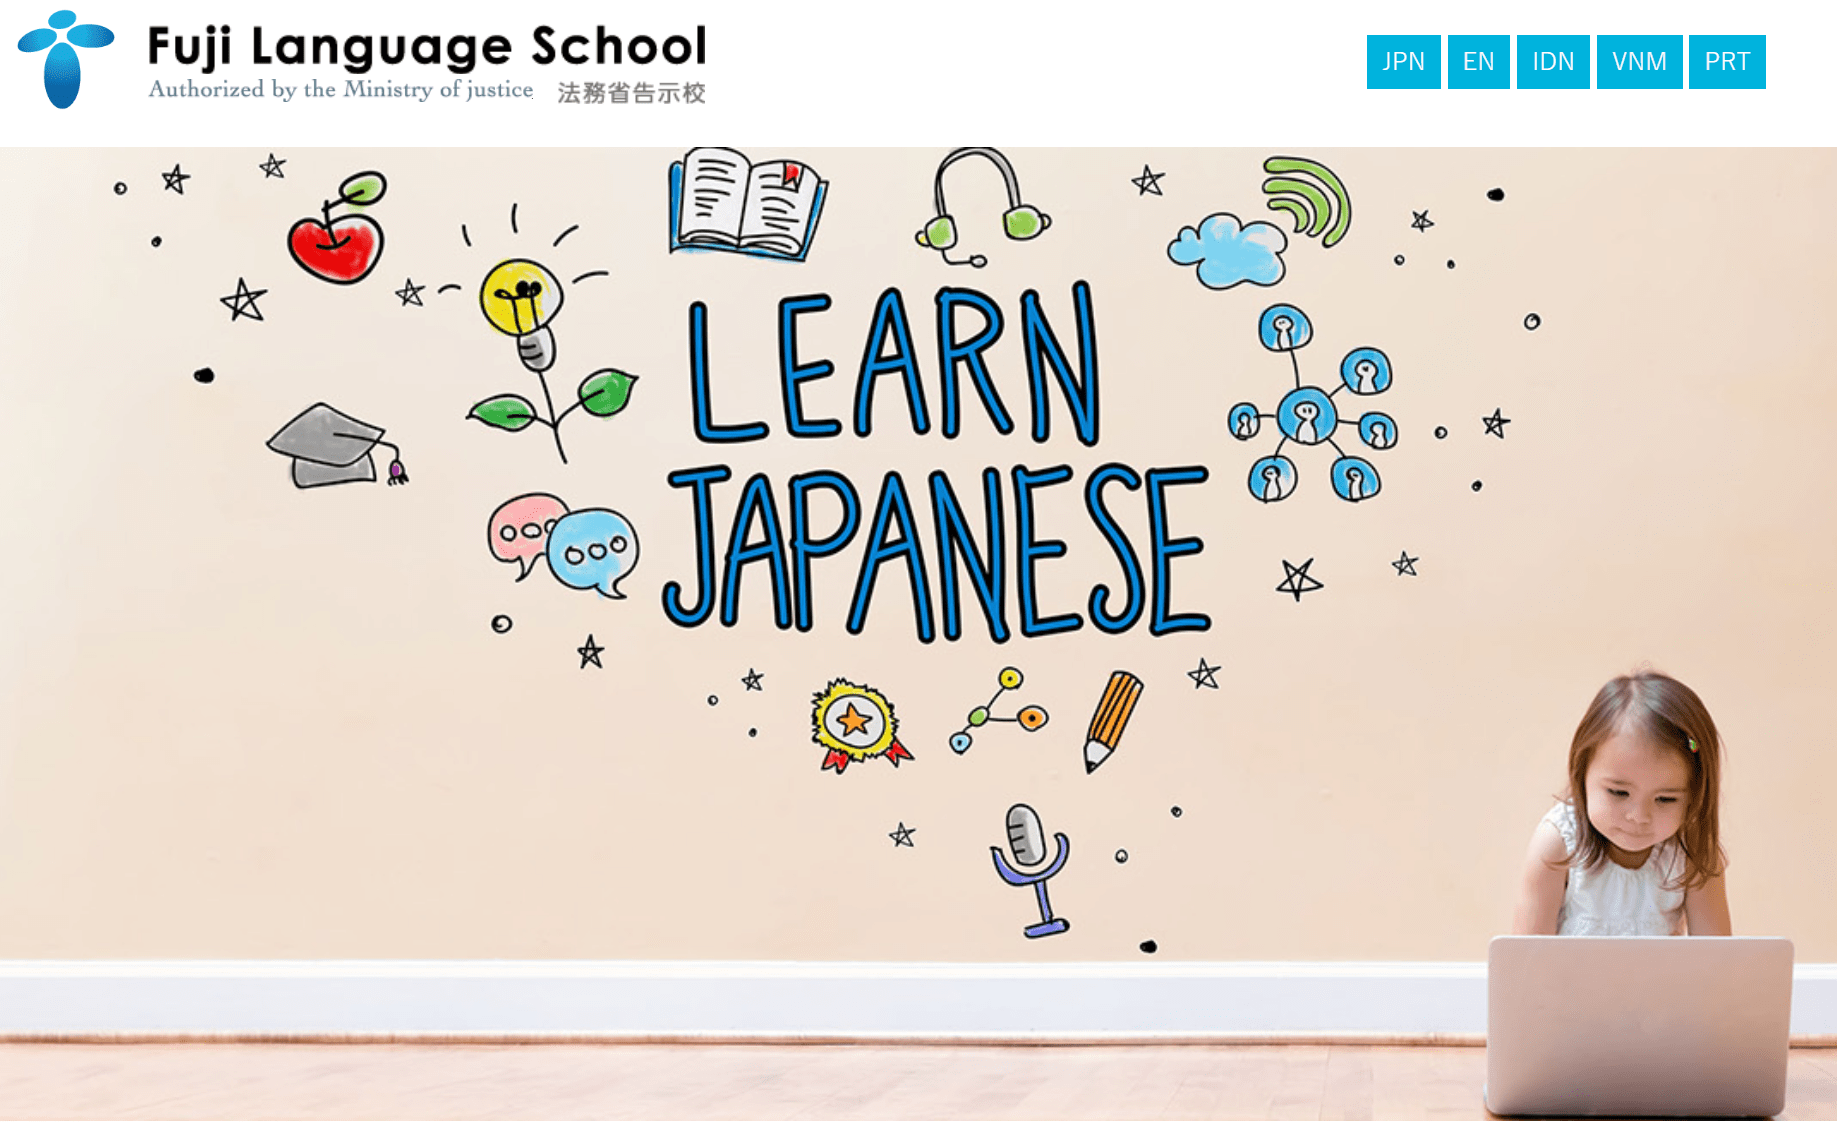 Fuji Language School website